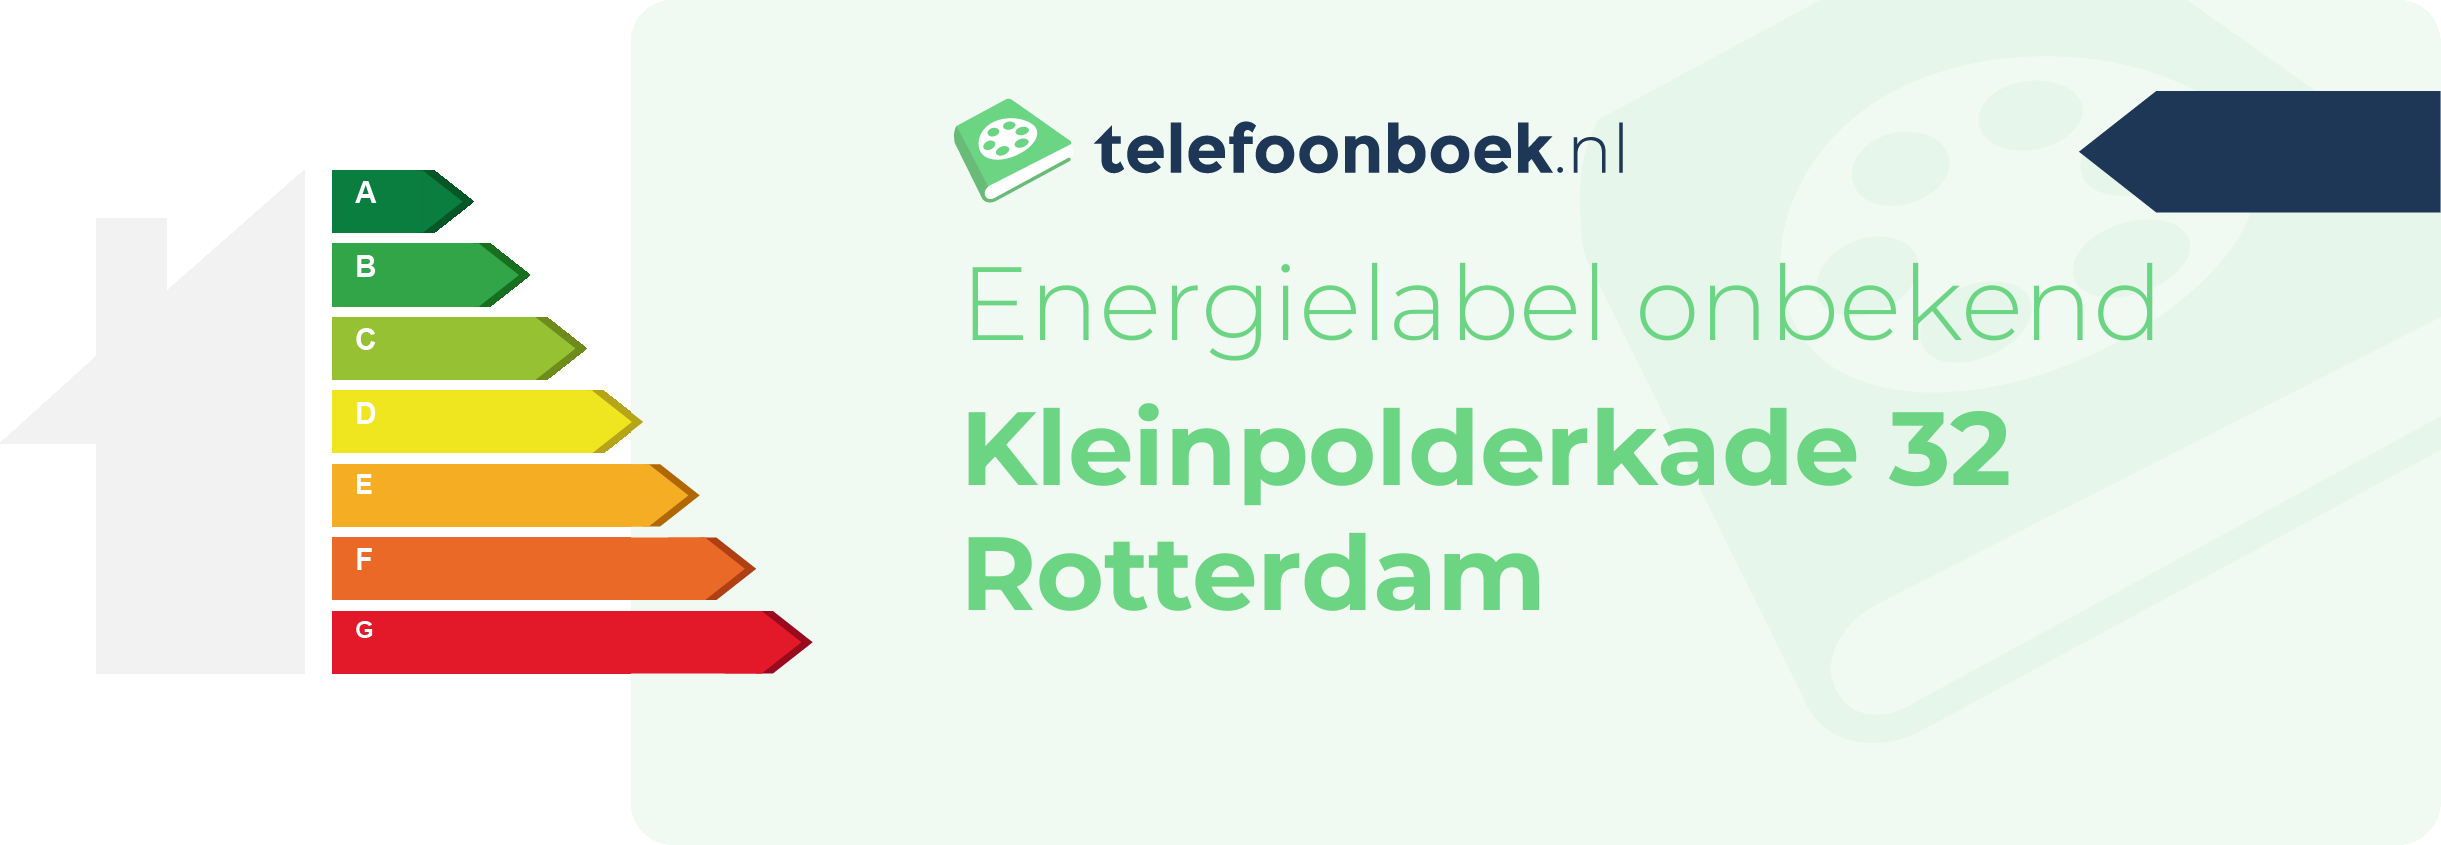 Energielabel Kleinpolderkade 32 Rotterdam